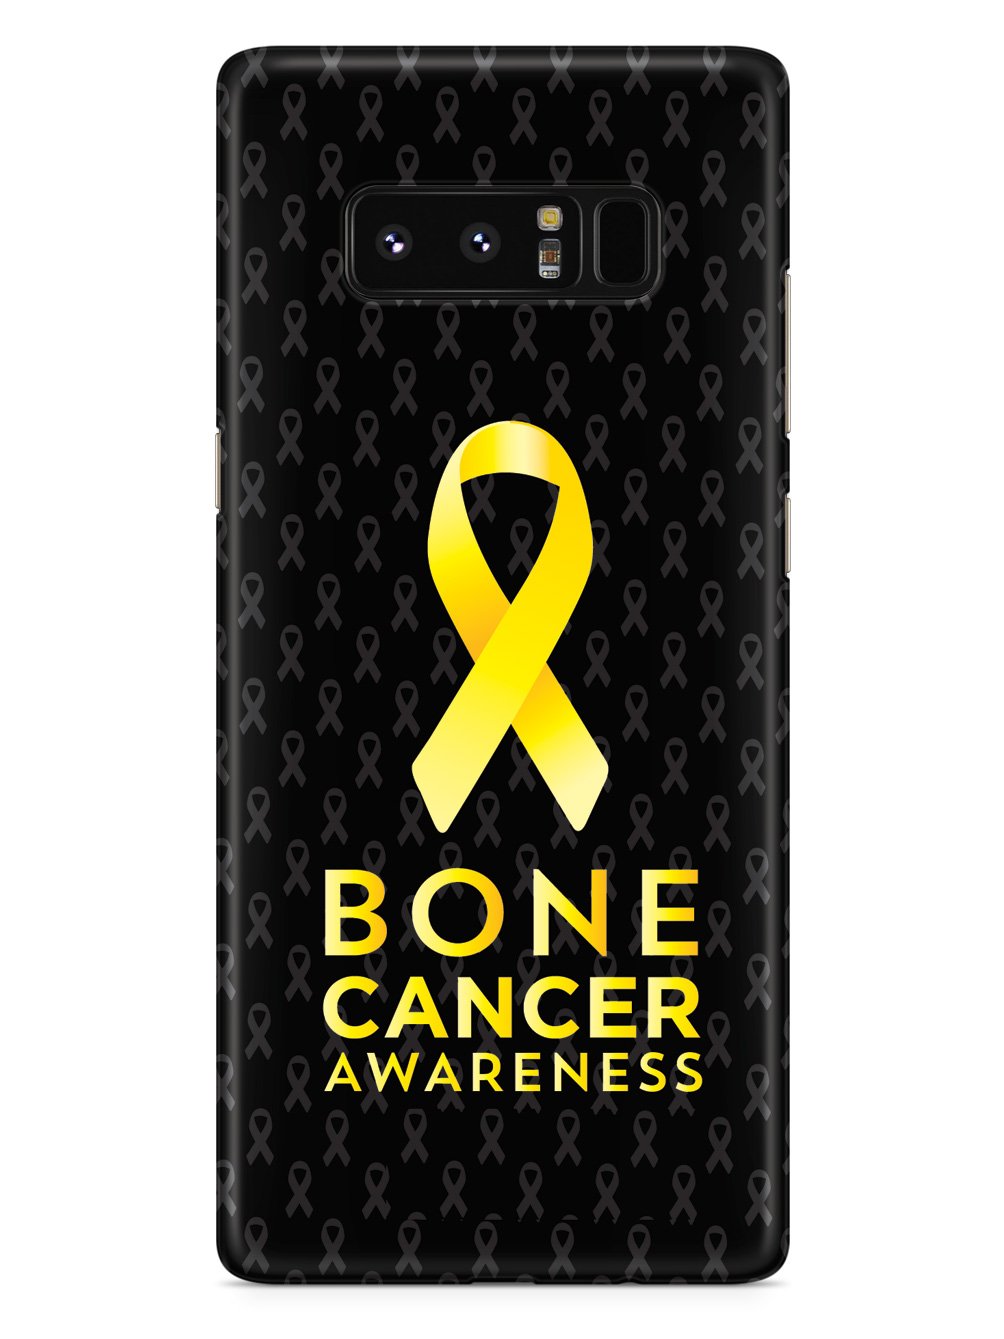 Bone Cancer Awareness Case